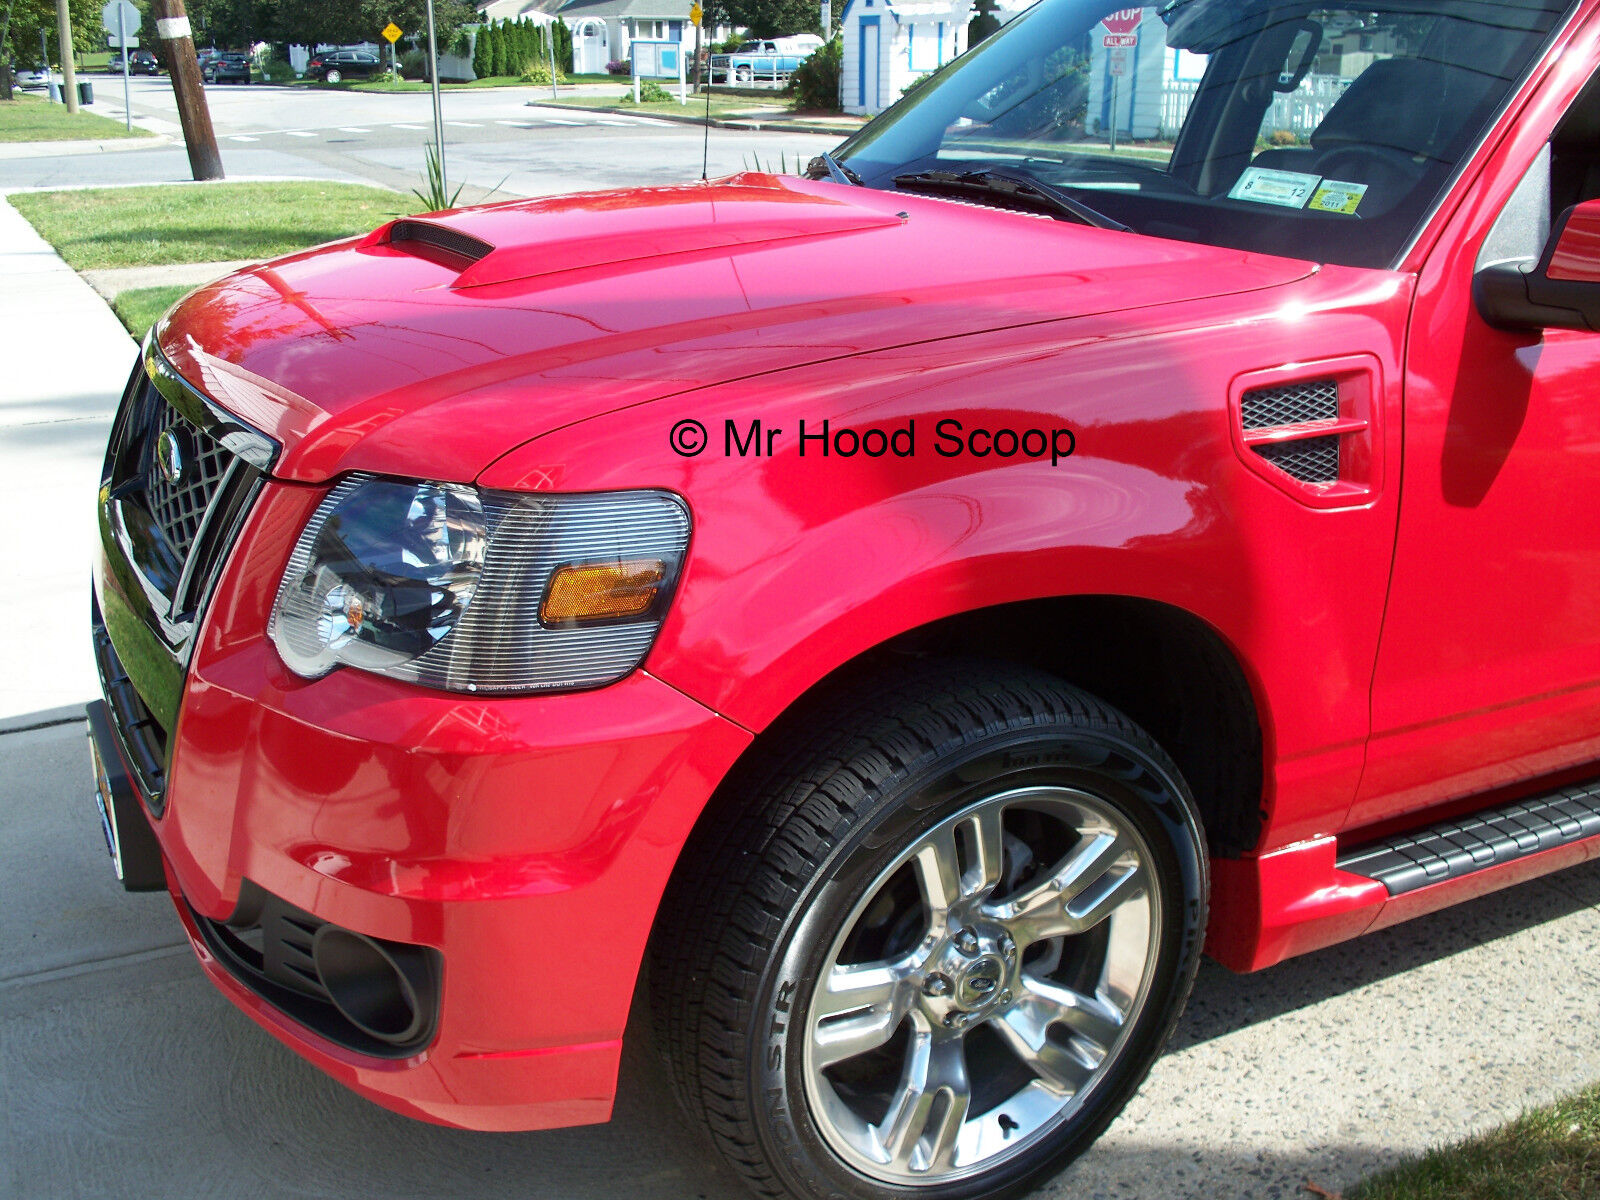 Hood Scoop For Ford Explorer SportTrac and Adrenalin MrHoodScoop UNPAINTED HS009